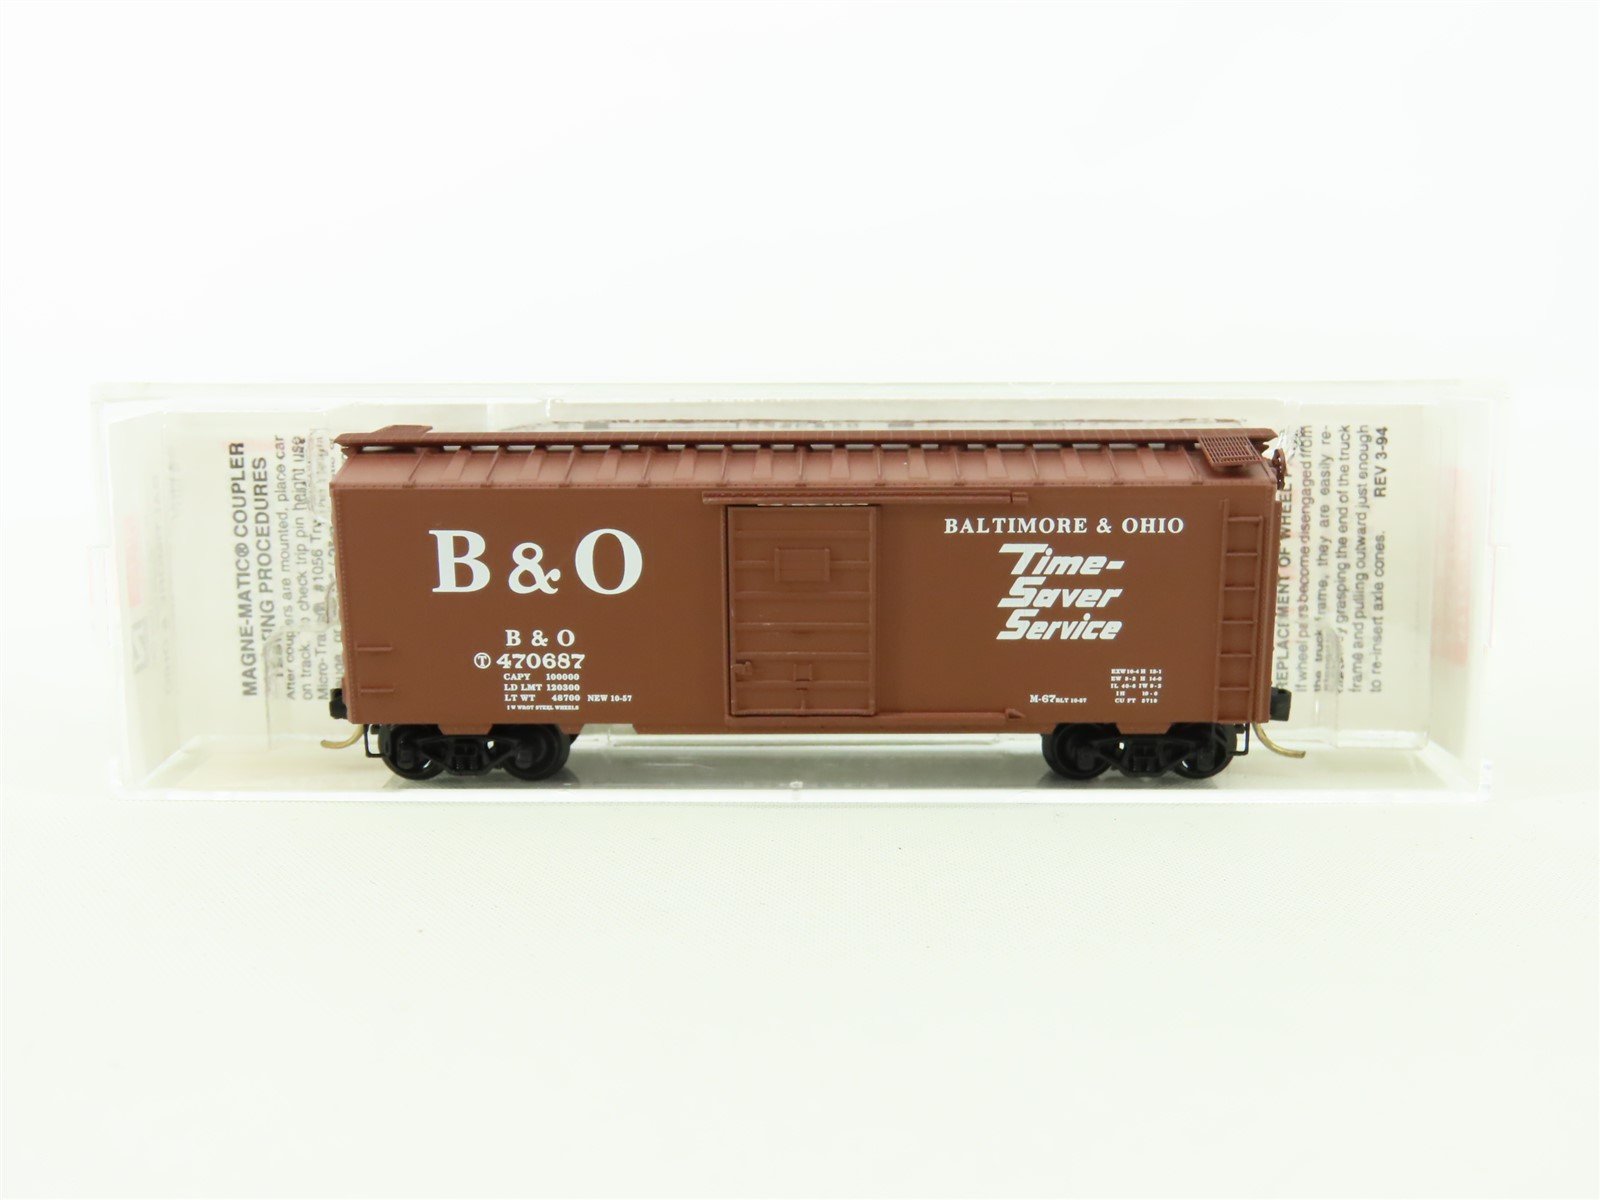 N Micro-Trains MTL 20346 B&O Baltimore & Ohio "Time-Saver" 40' Box Car #470687